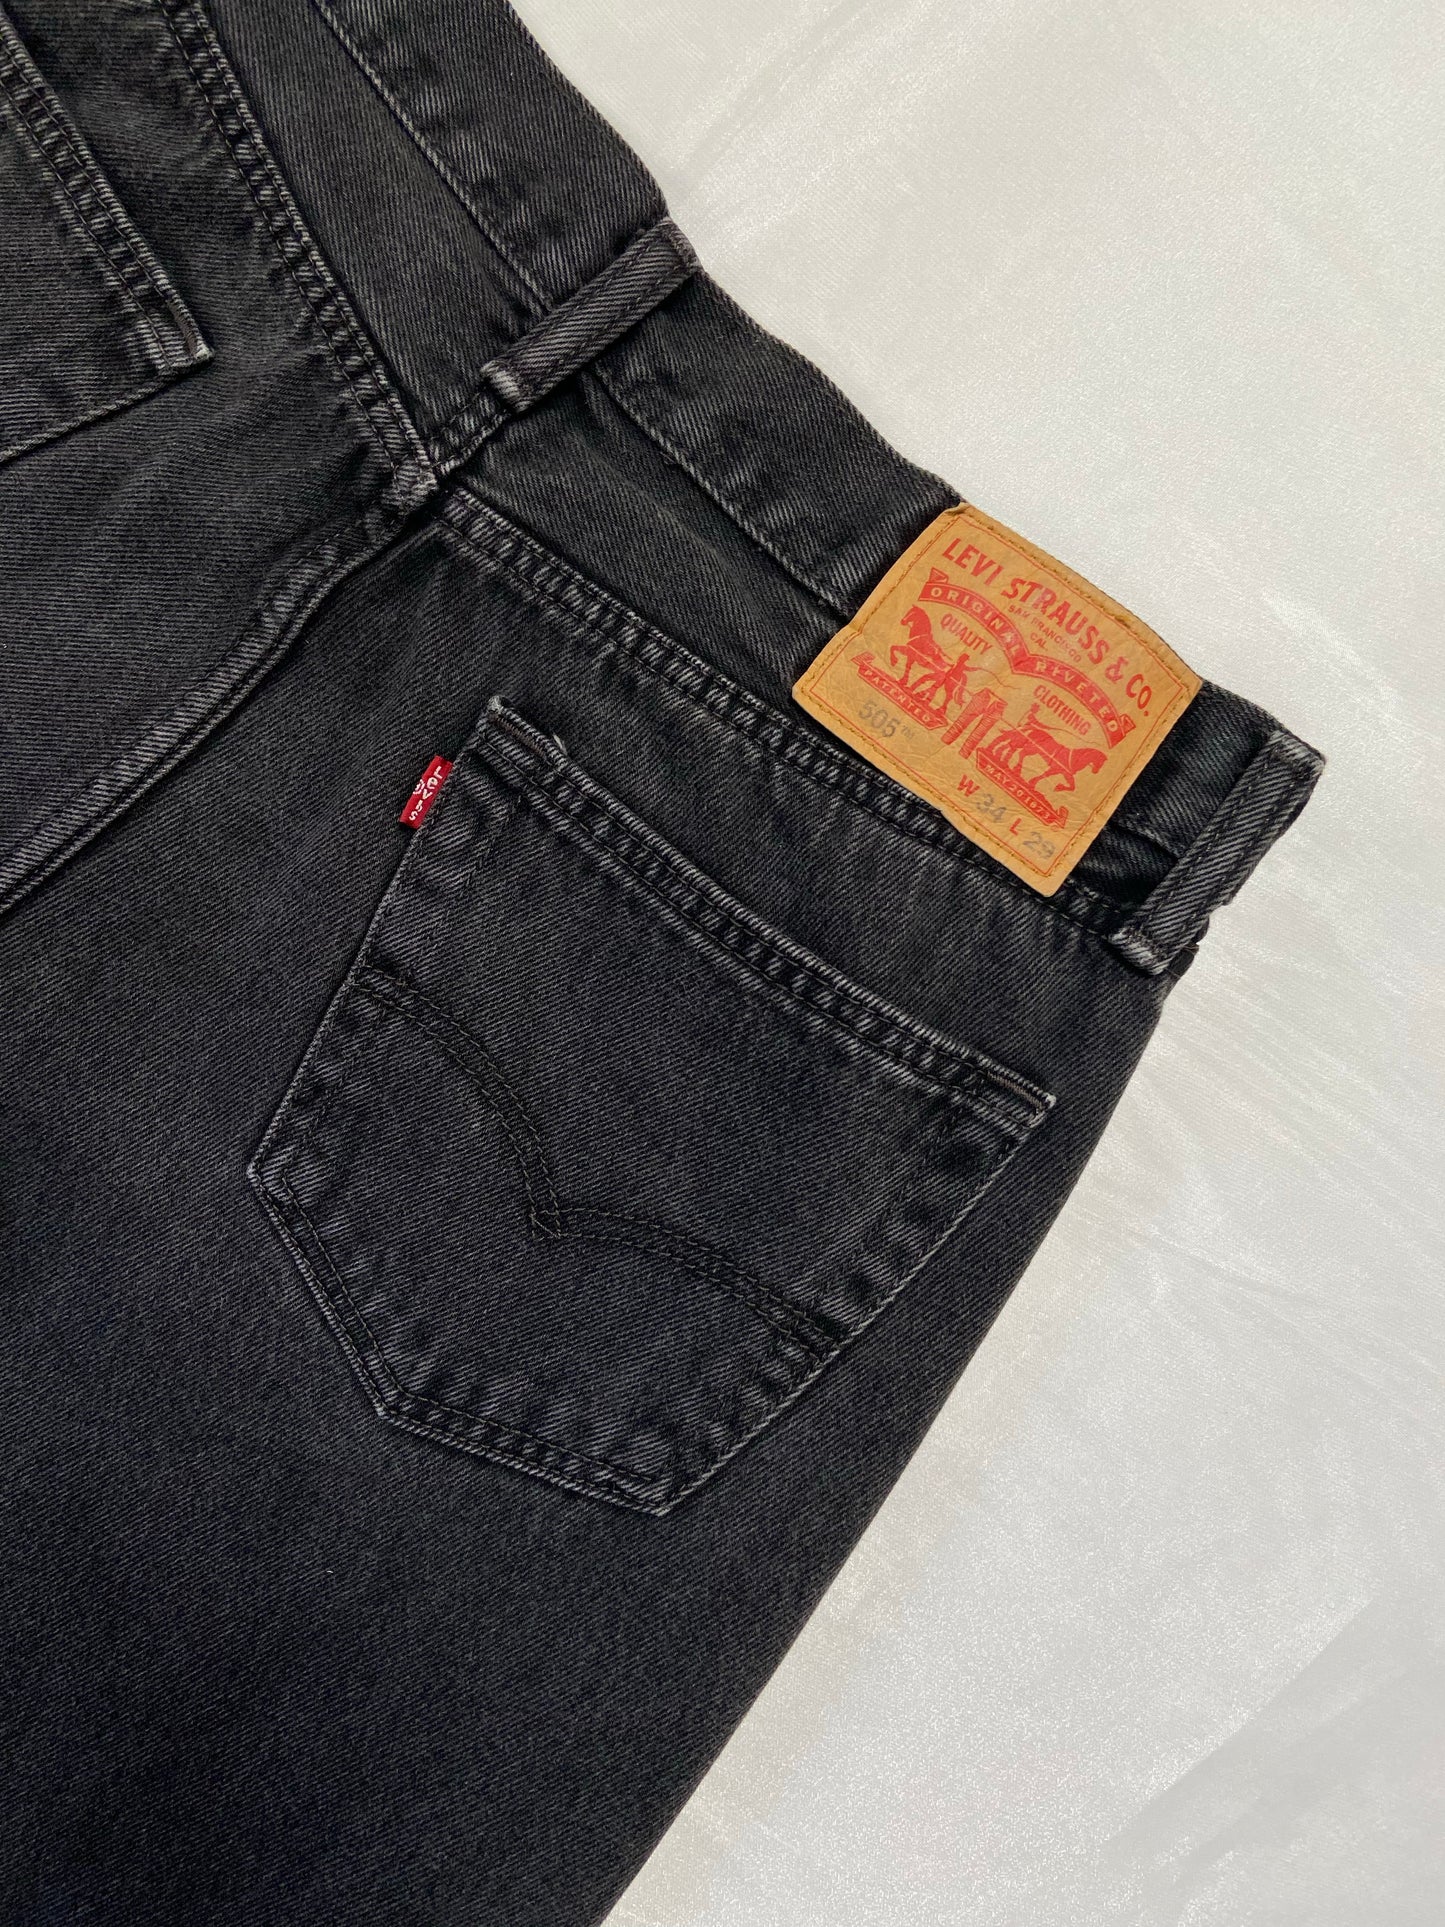 505 Levi’s Black Jeans - 31”